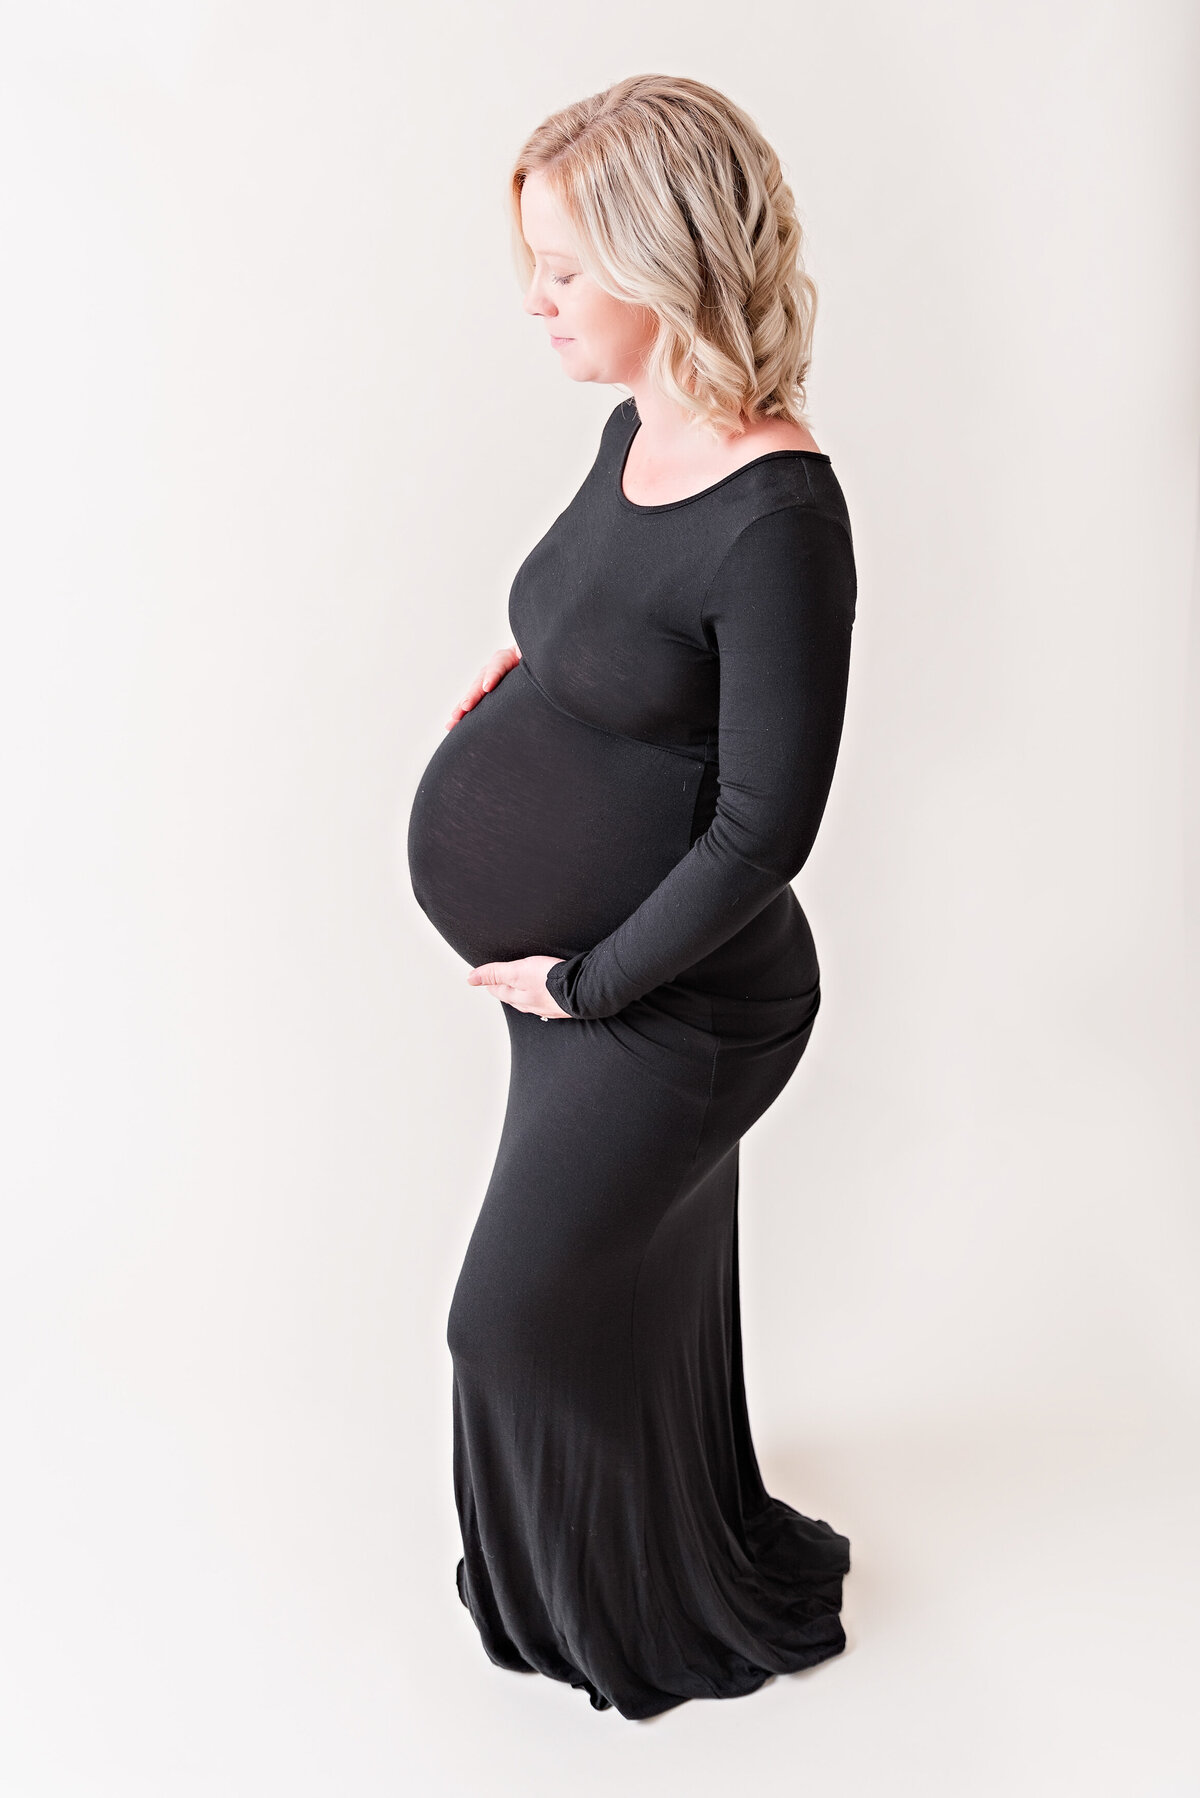 aiden-laurette-photography-maternity-photographer361